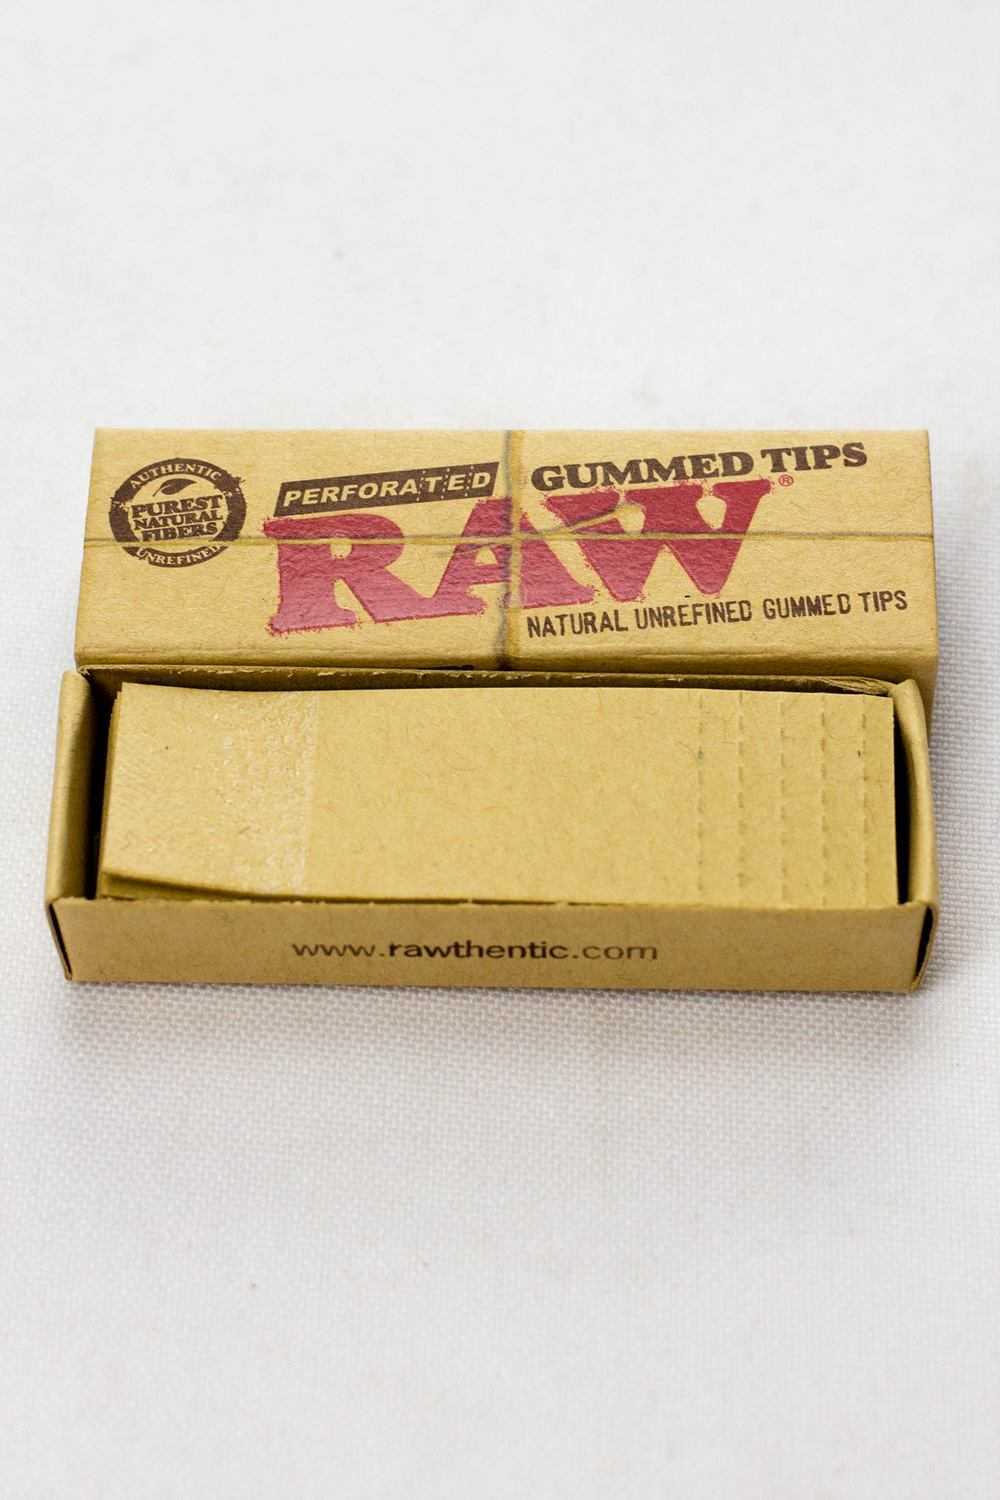 Raw Natural undefined gummed tips